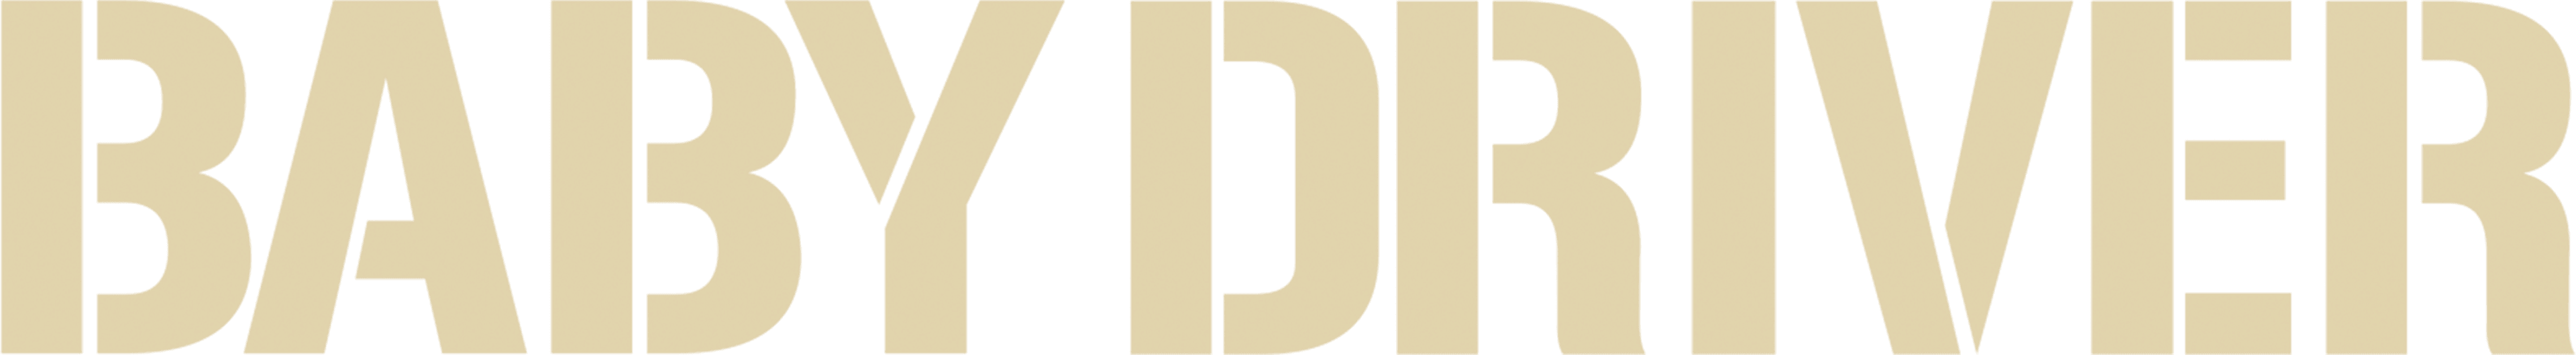 Baby Driver logo